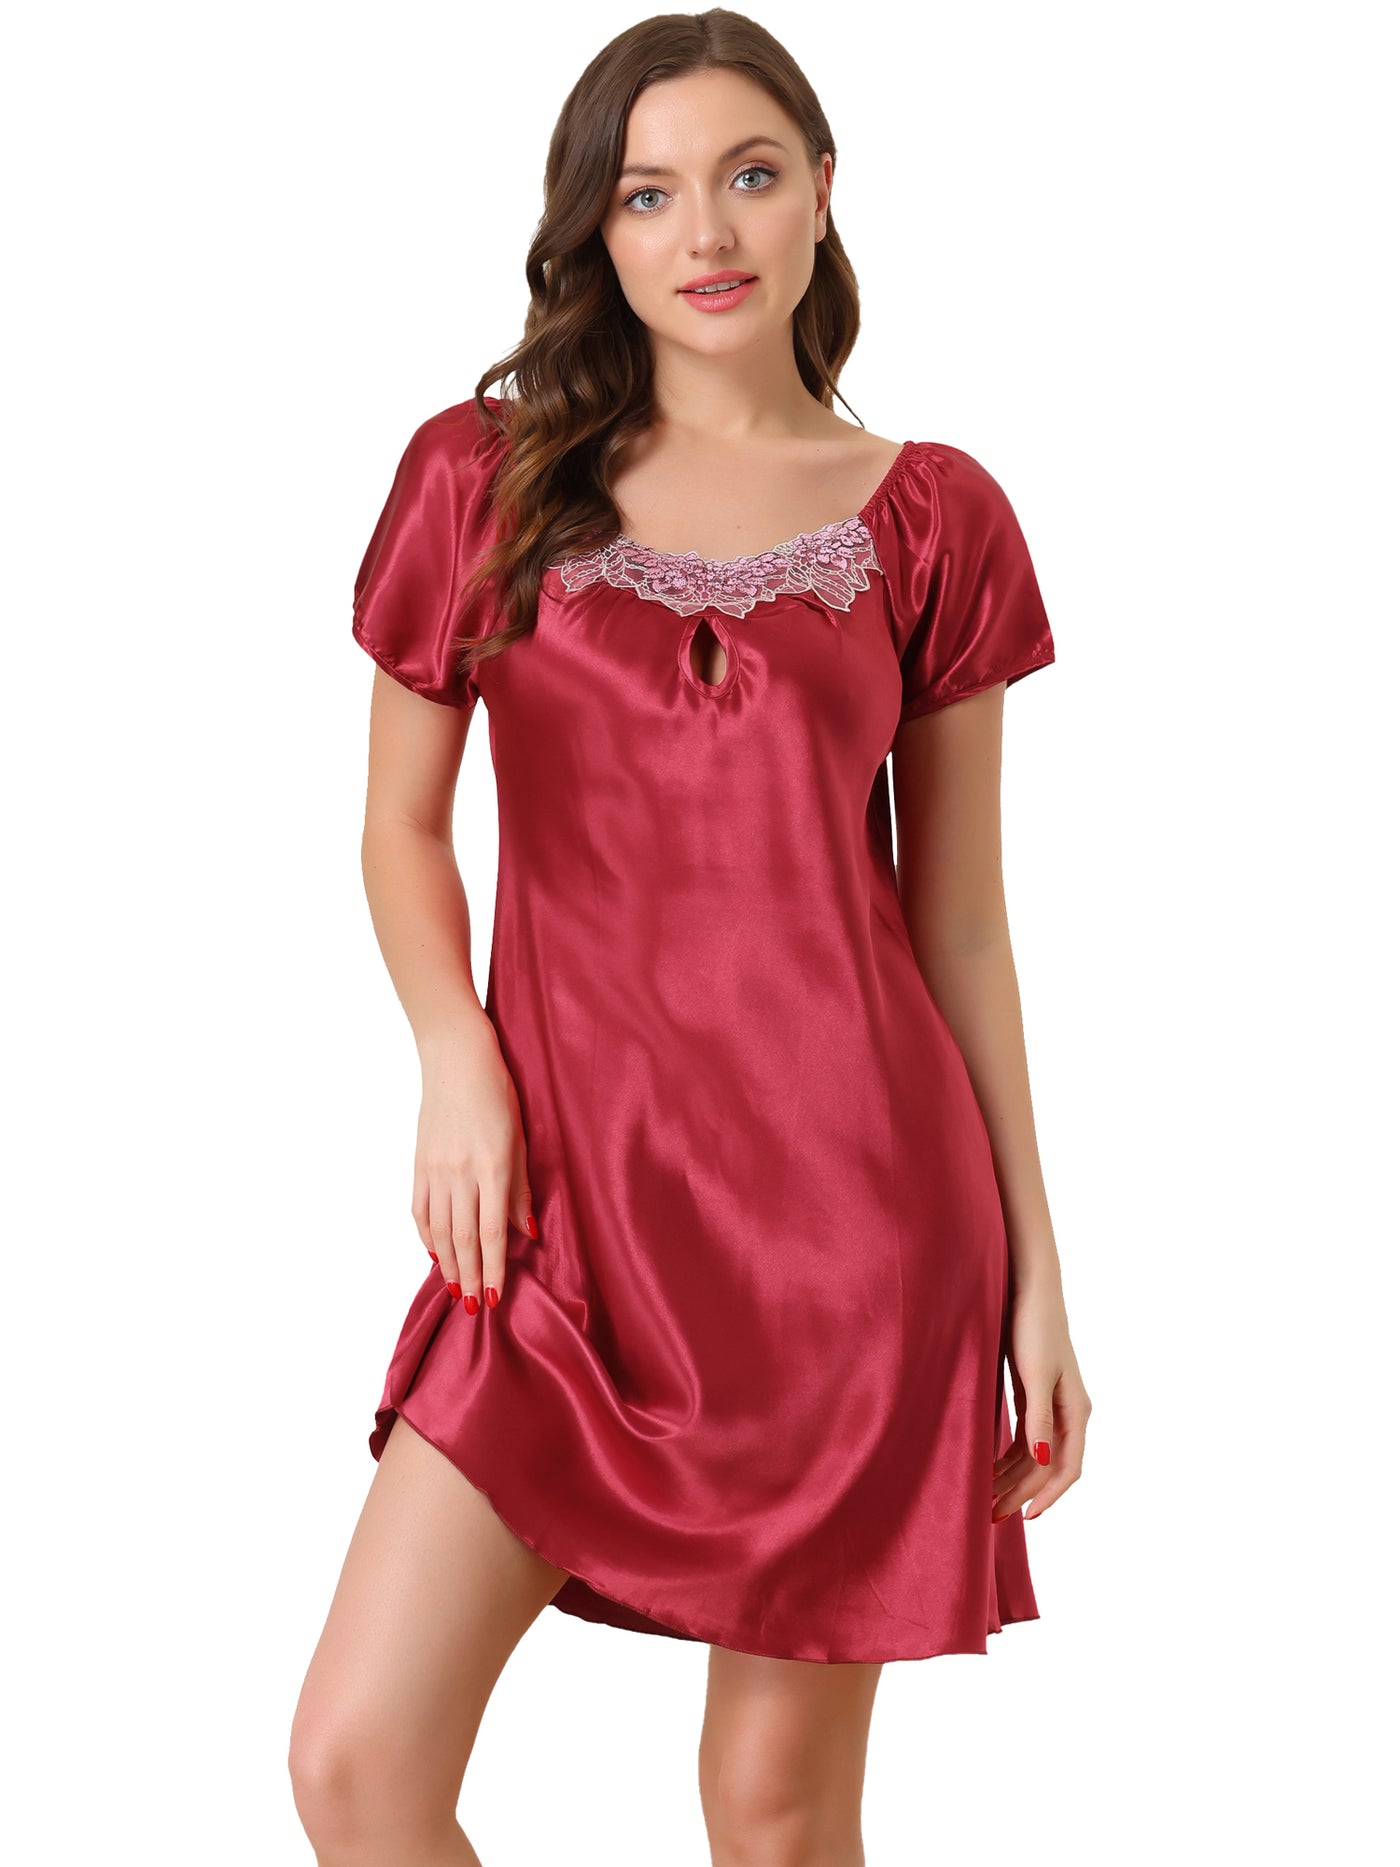 Bublédon Womens Satin Sleepwear Pajama Dress Nightshirt Soft Lounge Nightgowns